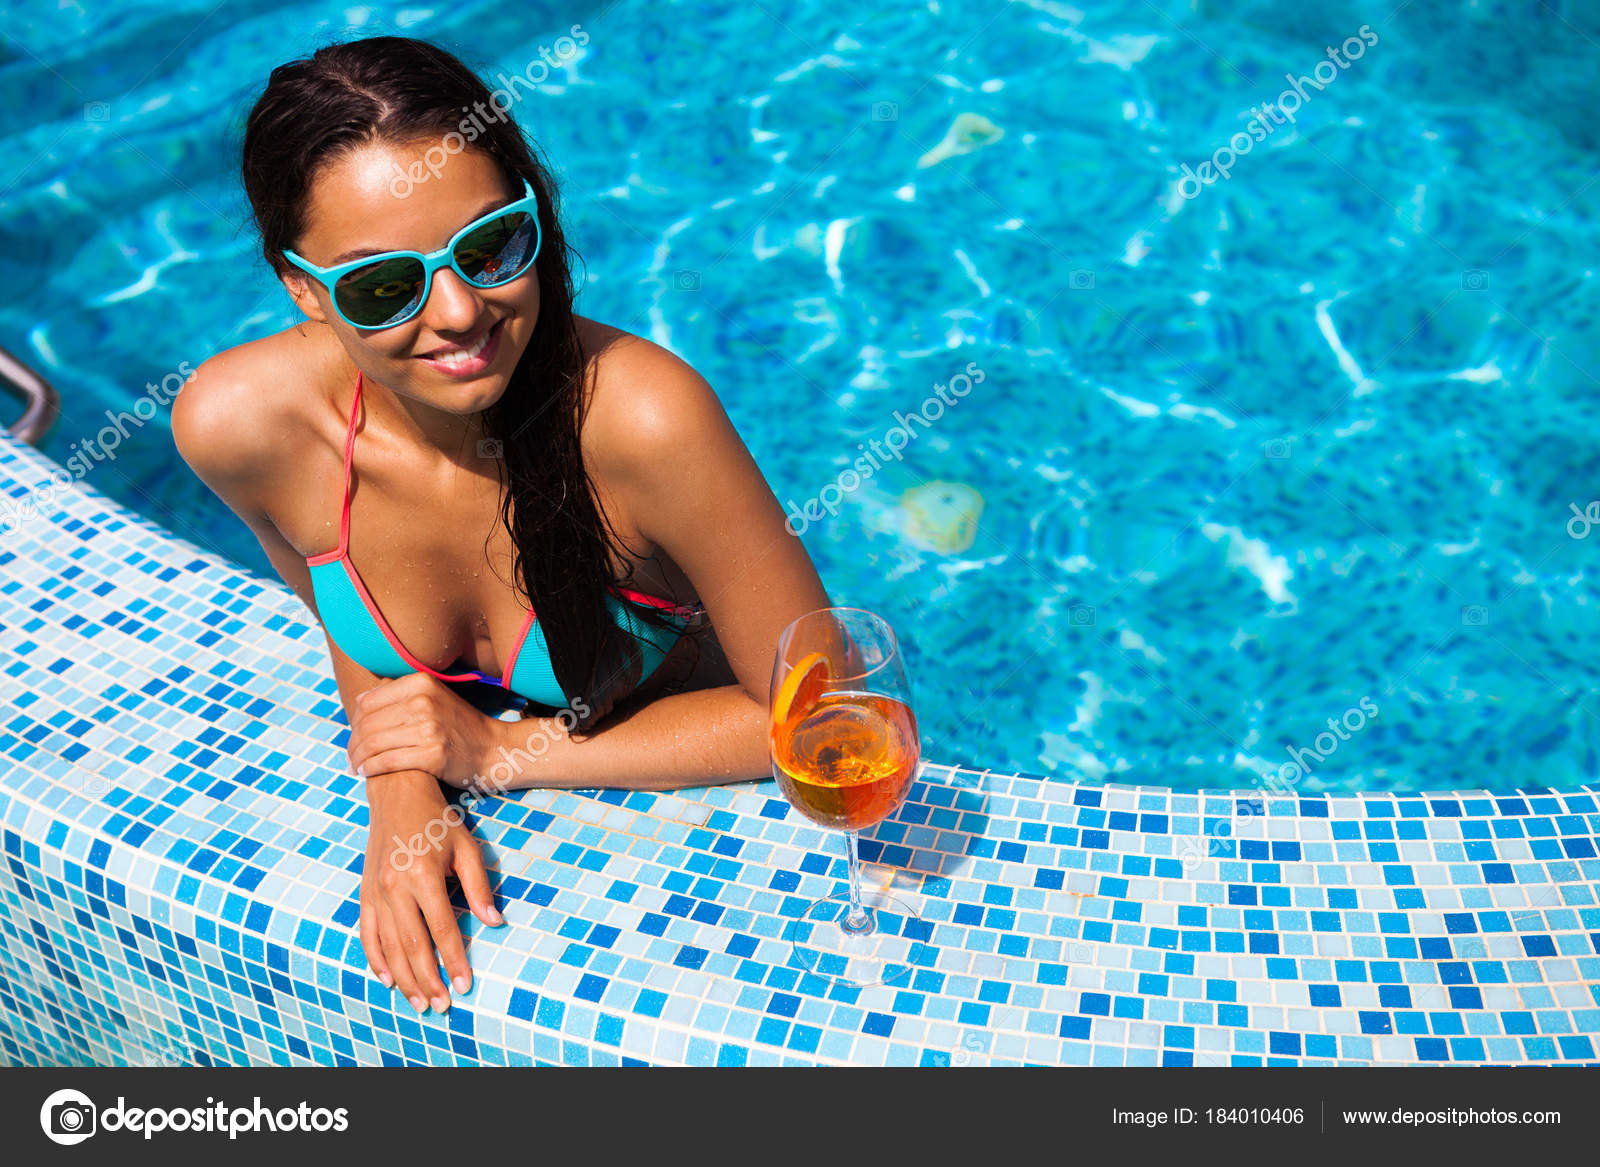 Frau Entspannen Auf Dem Pool Wasser In Hei En Sonnigen Tag Summ